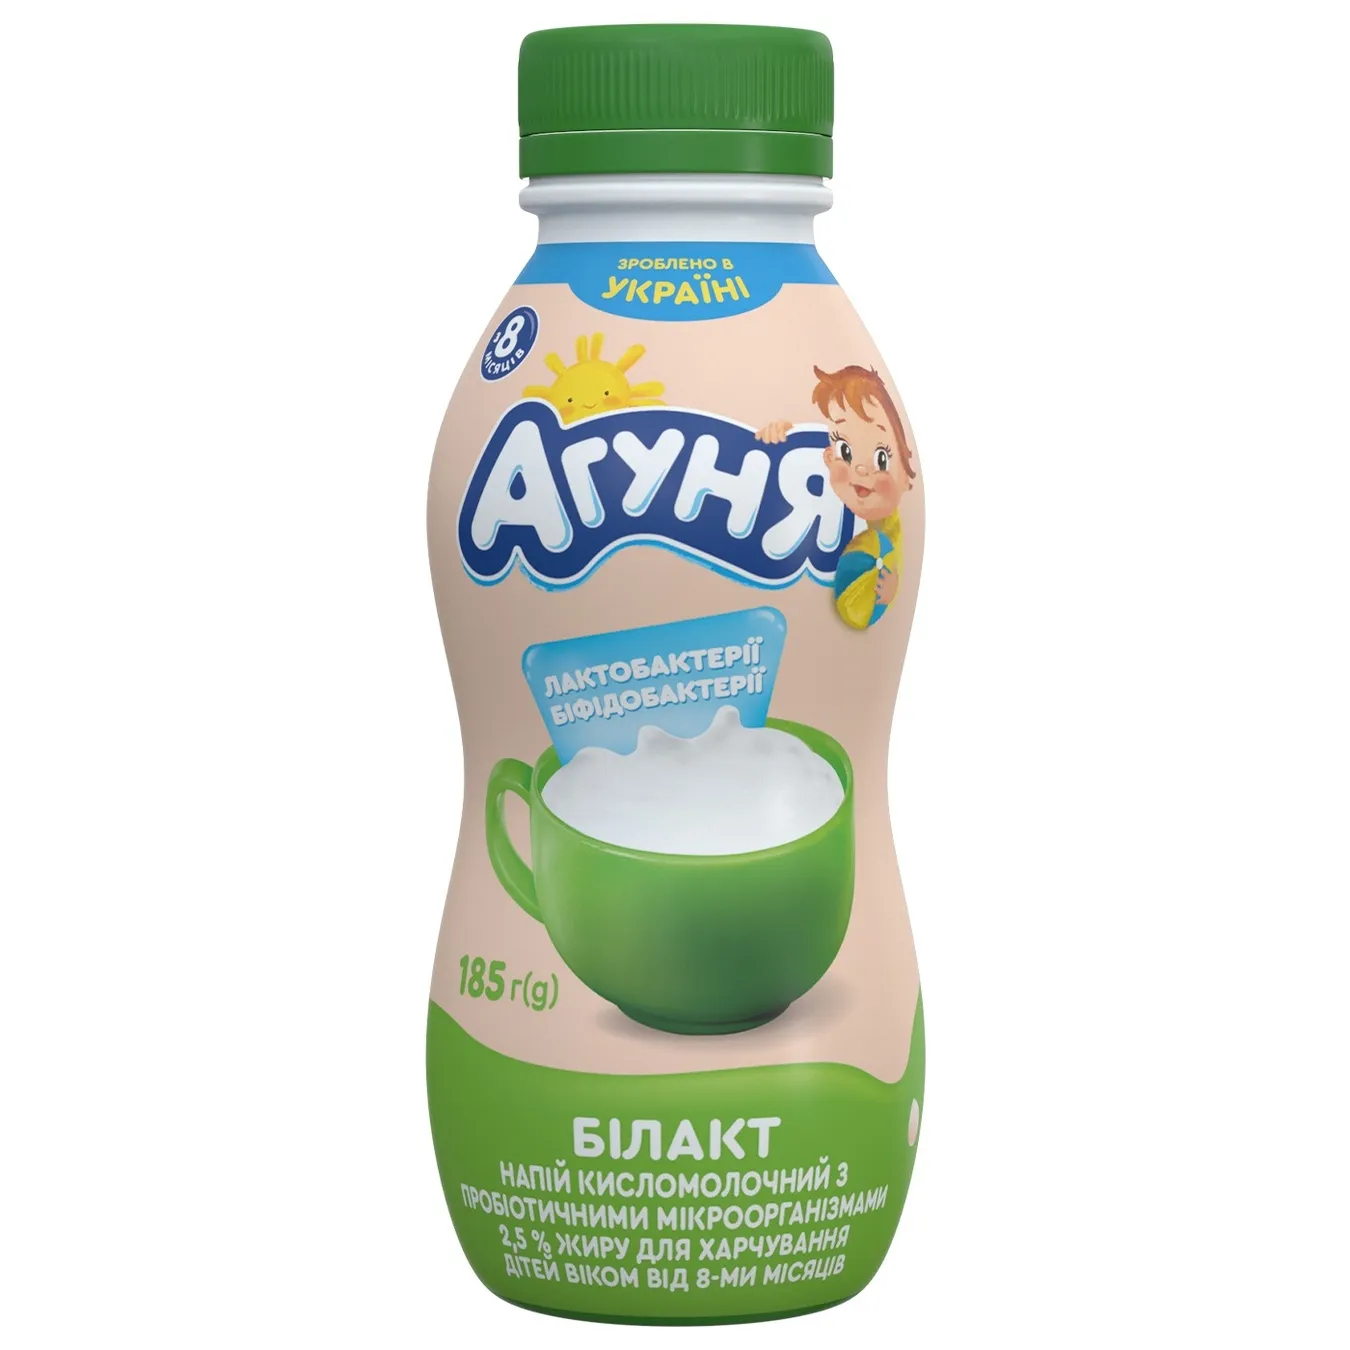 Agunya Bilakt fermented milk drink 2.5% 185g